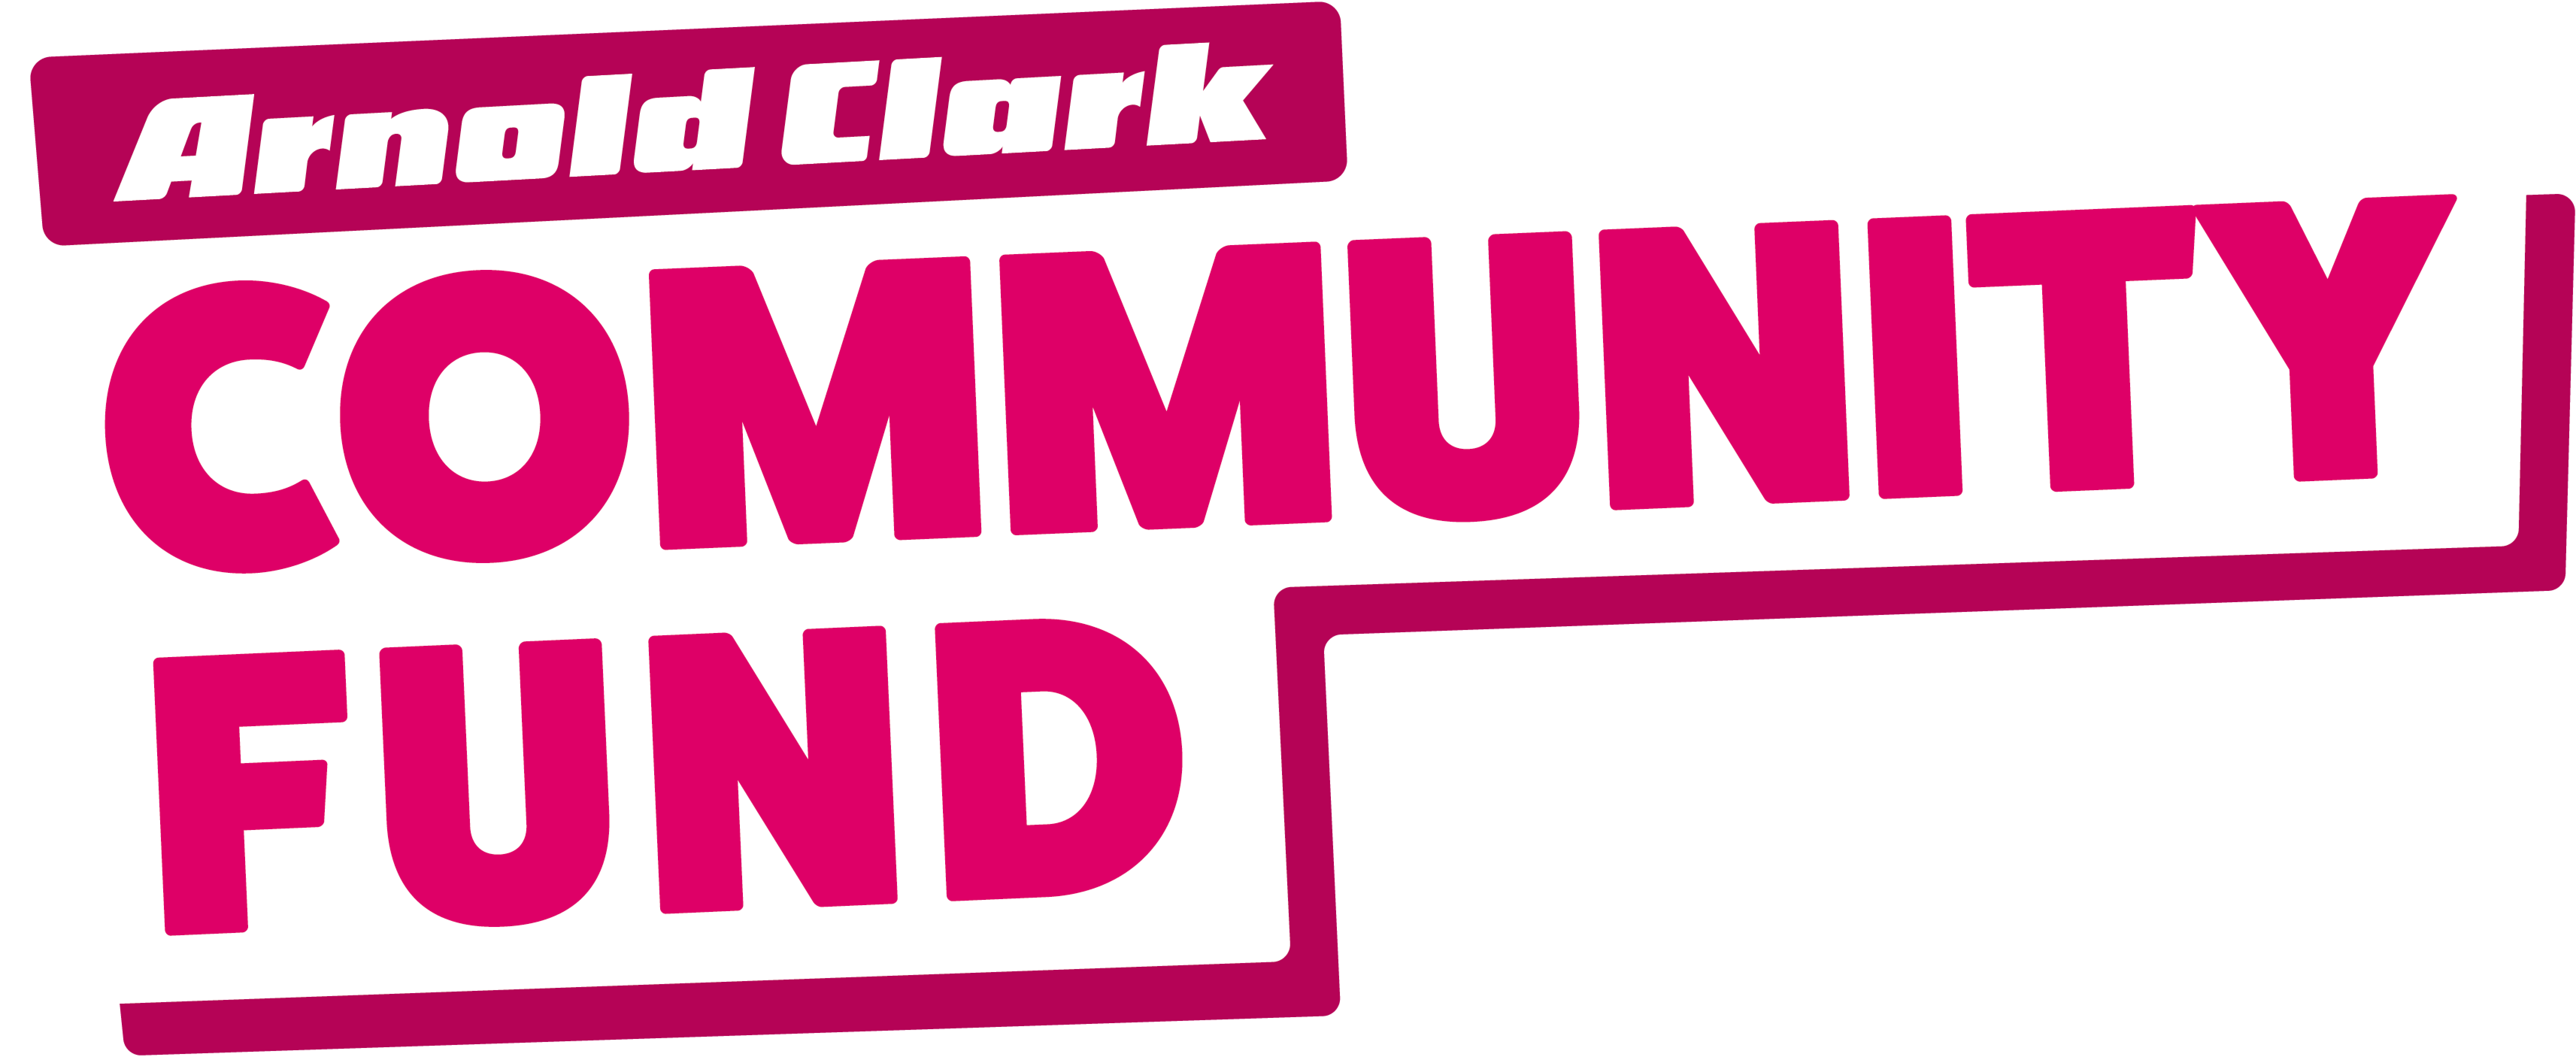 The Arnold Clark Community Fund